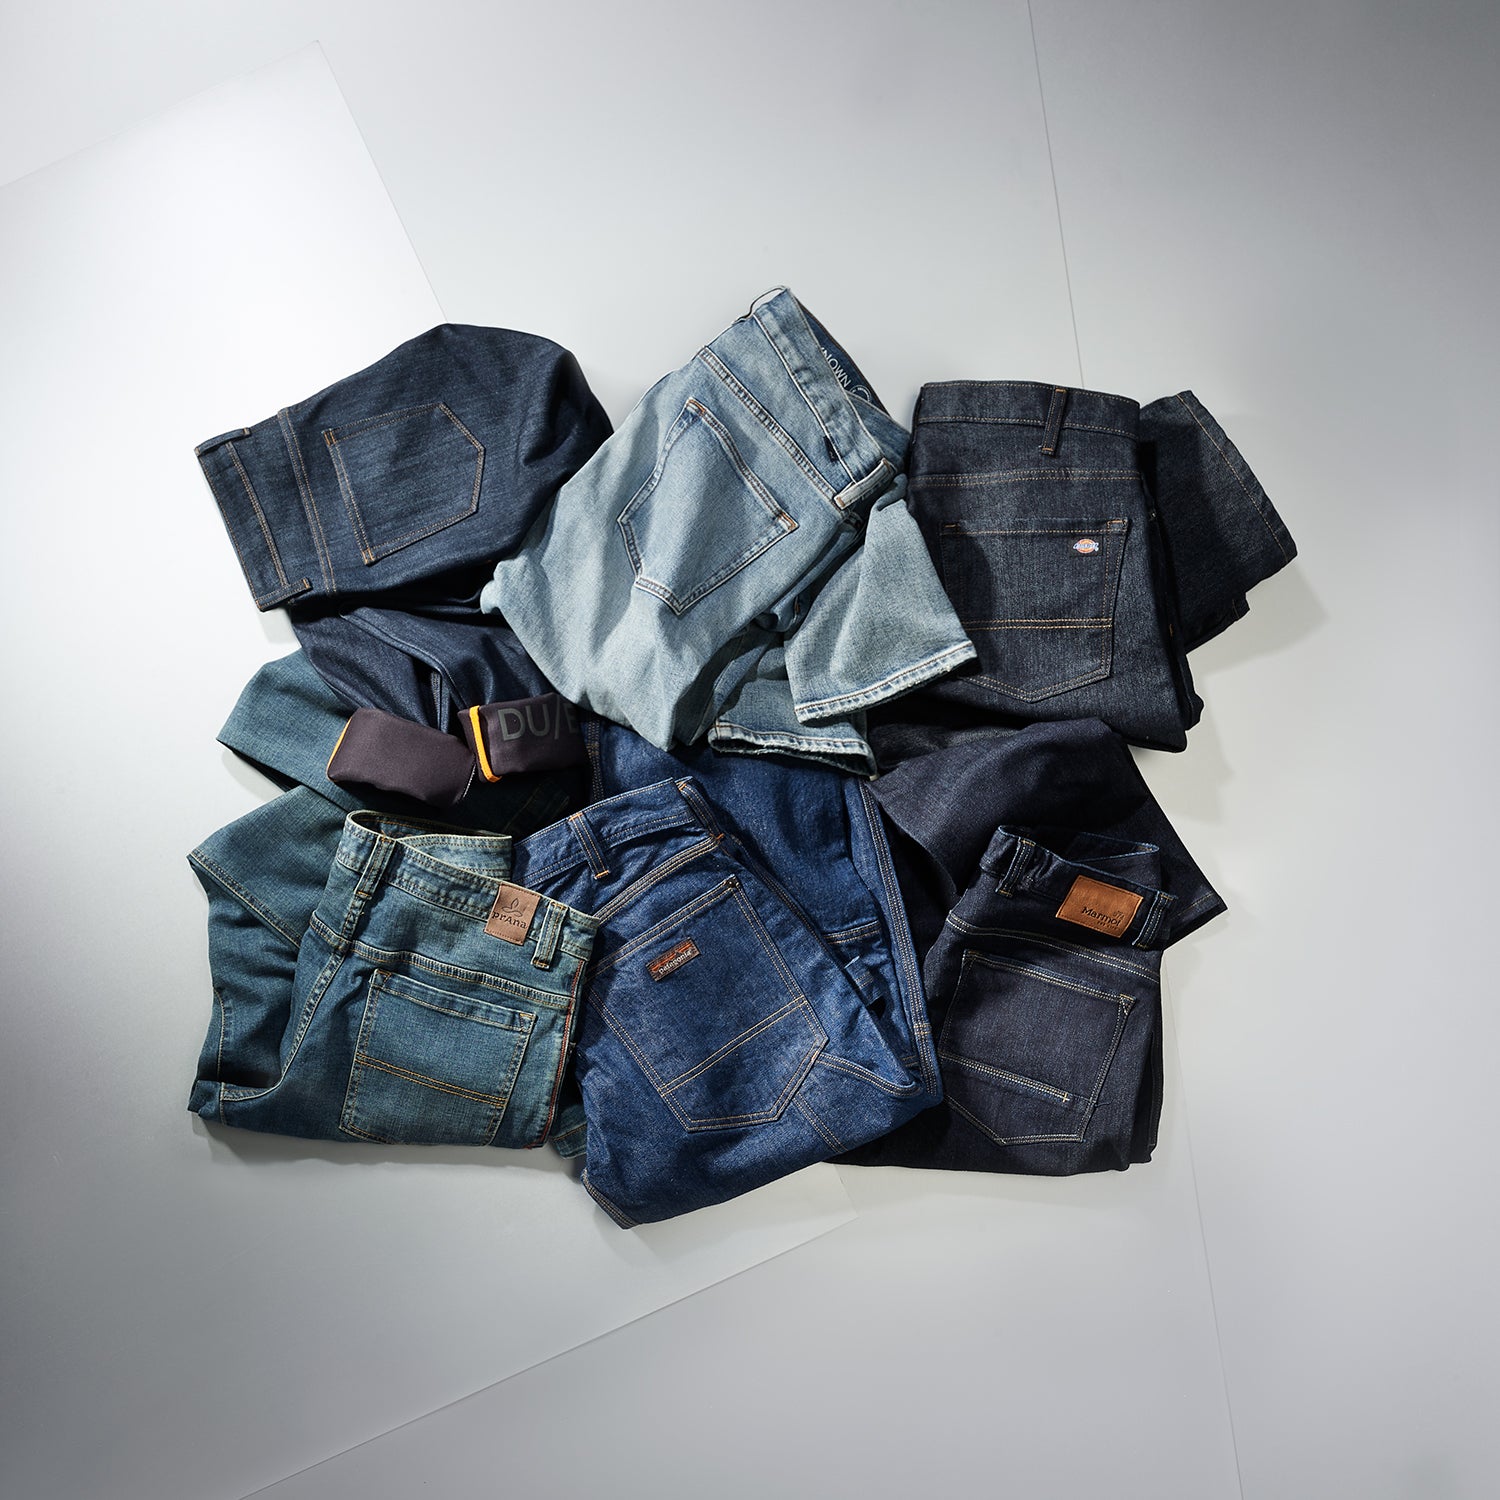 The Best Japanese Denim Jeans for Men | Cool Material